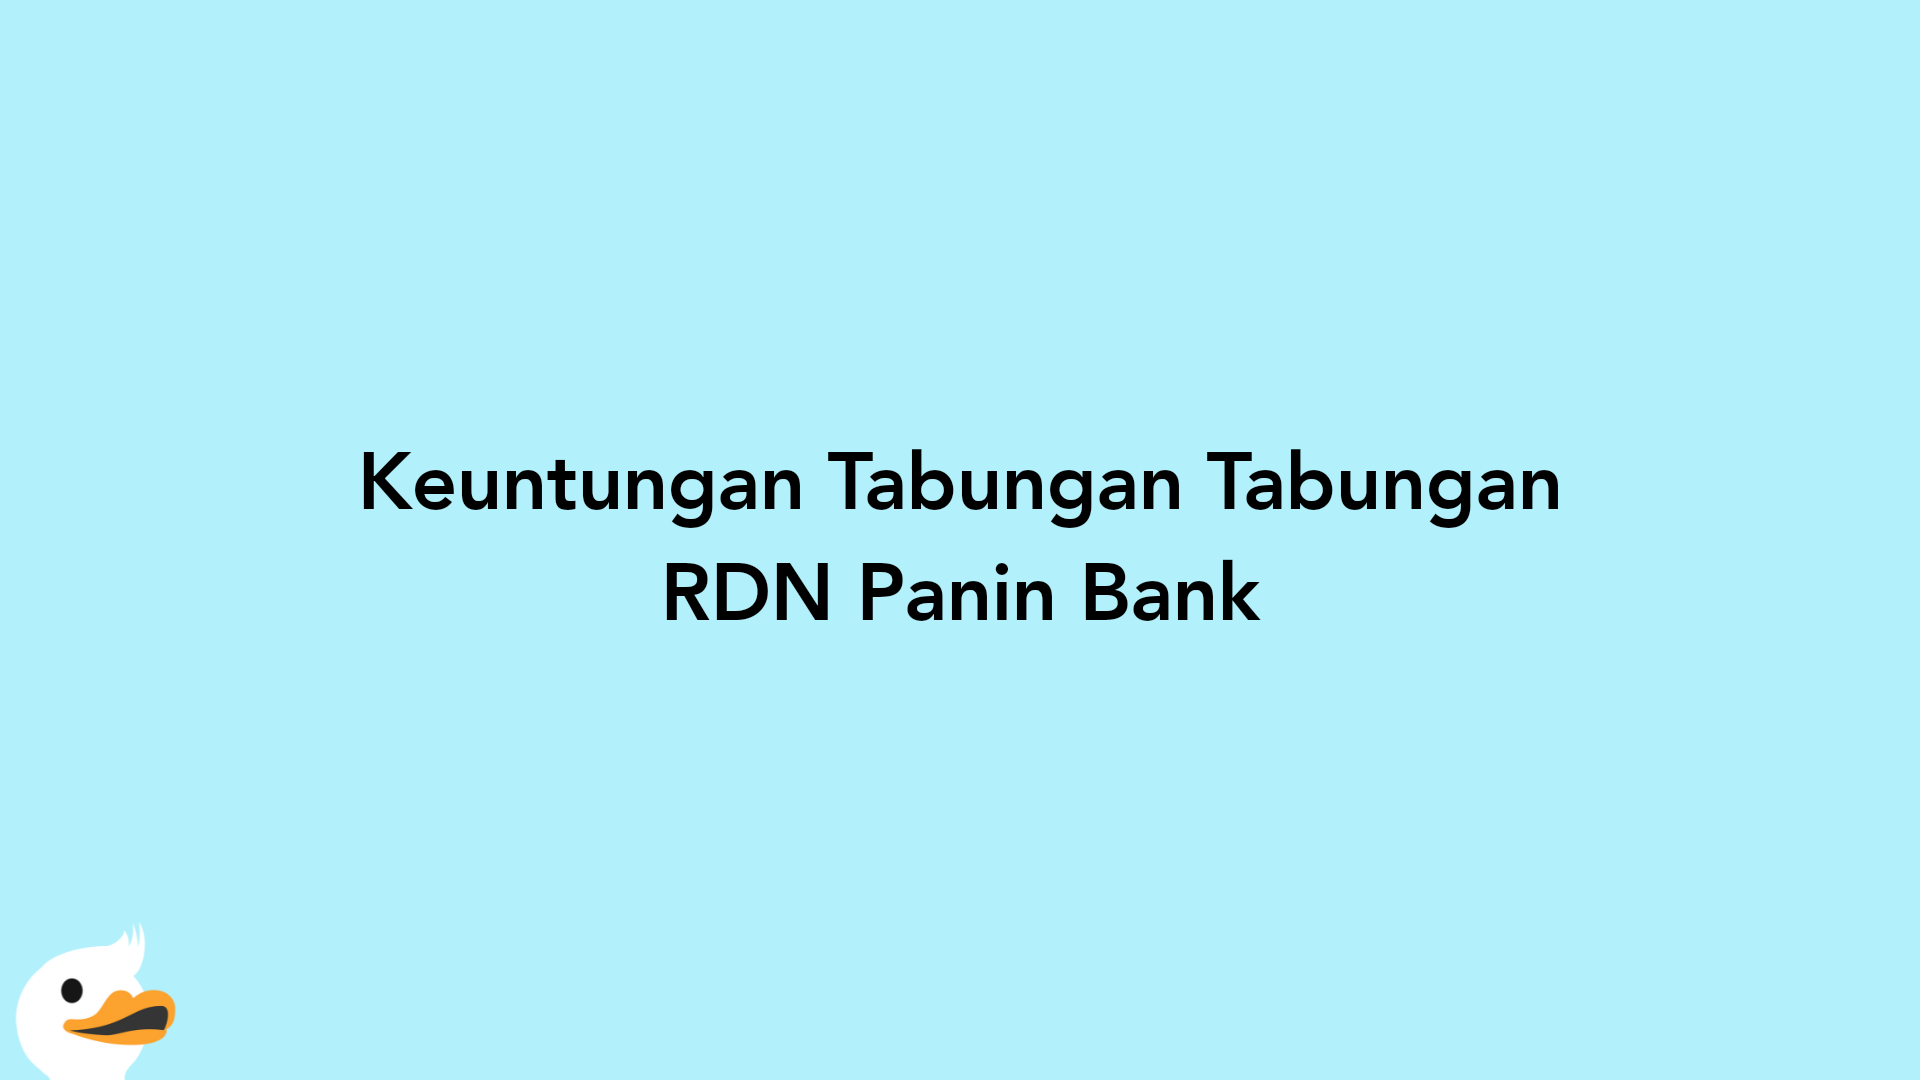 Keuntungan Tabungan Tabungan RDN Panin Bank